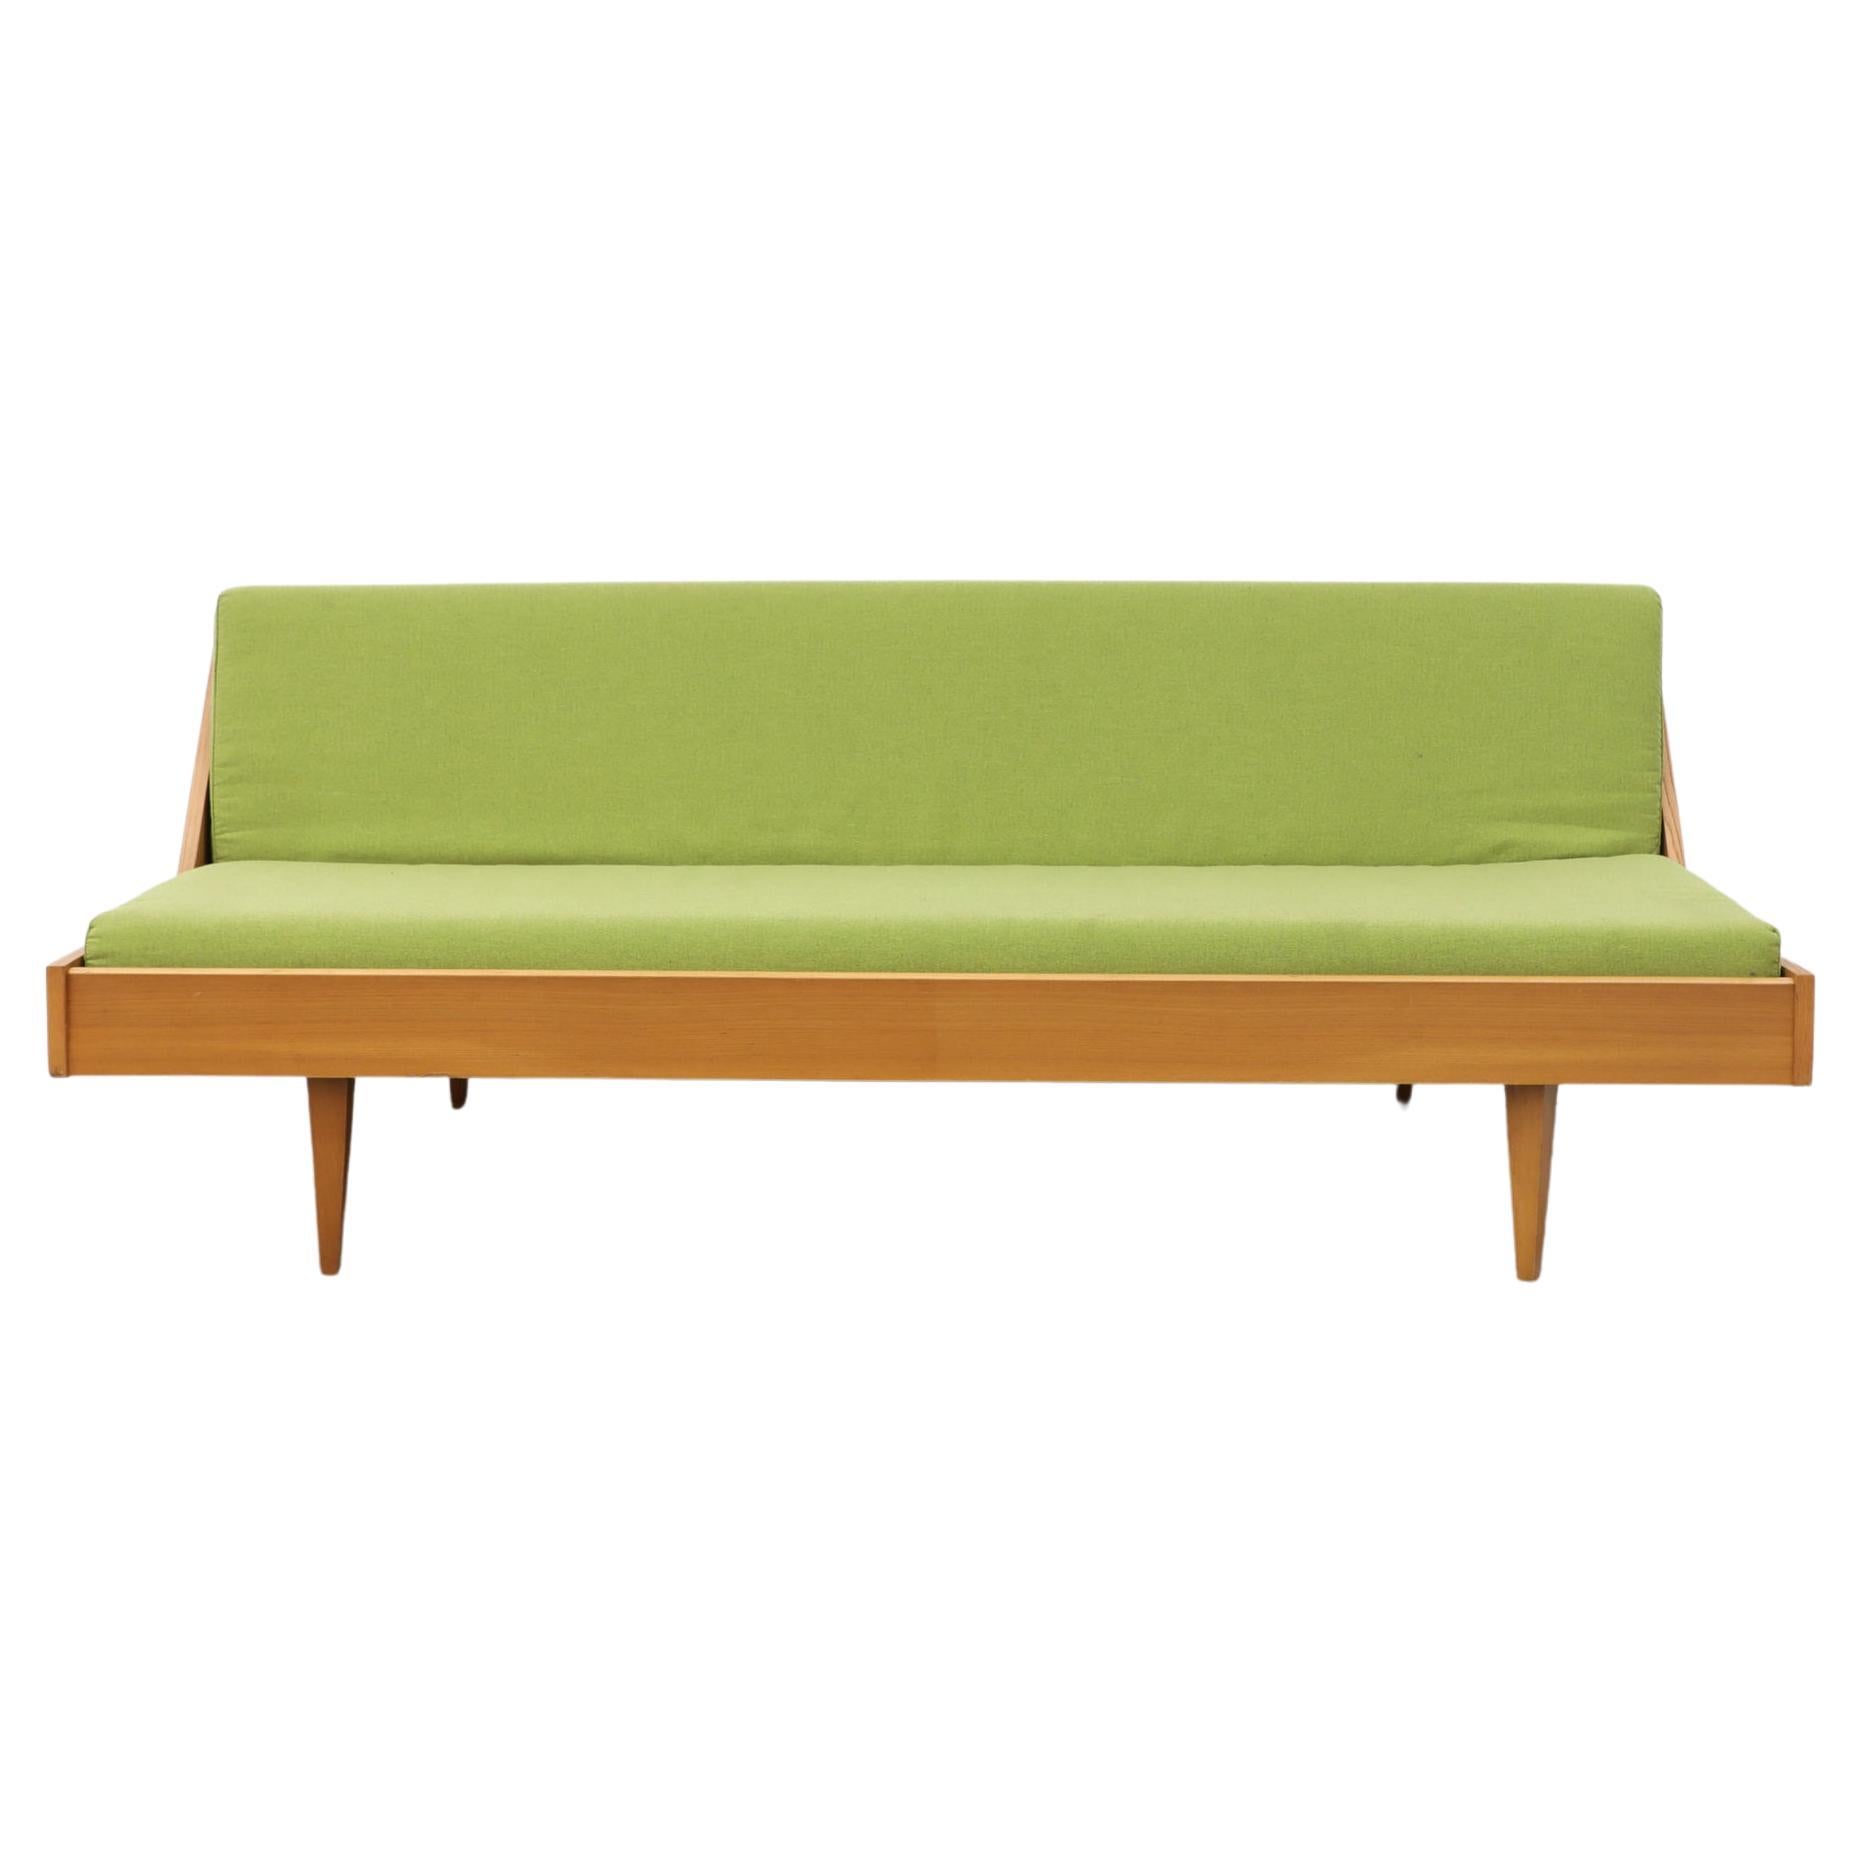 Hans Wegner 'attr' Model GE 258 for Getama Sleeper Sofa With Green Upholstery